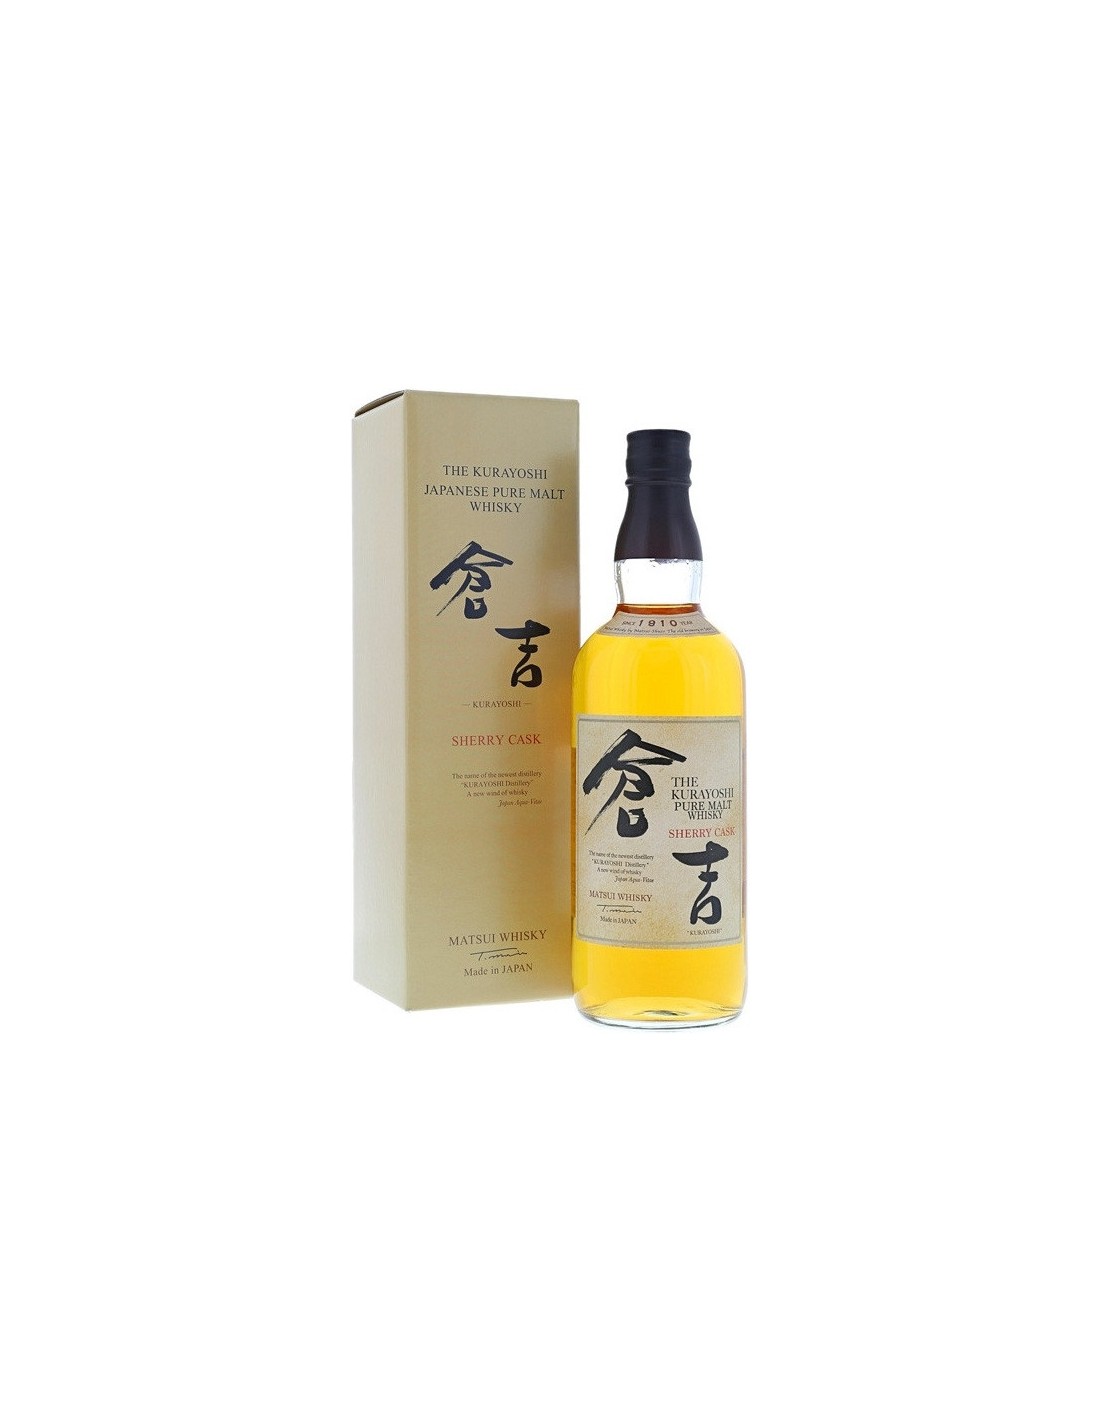 Whisky Matsui Kurayoshi Sherry Cask, 0.7L, 43% alc., Japonia alcooldiscount.ro